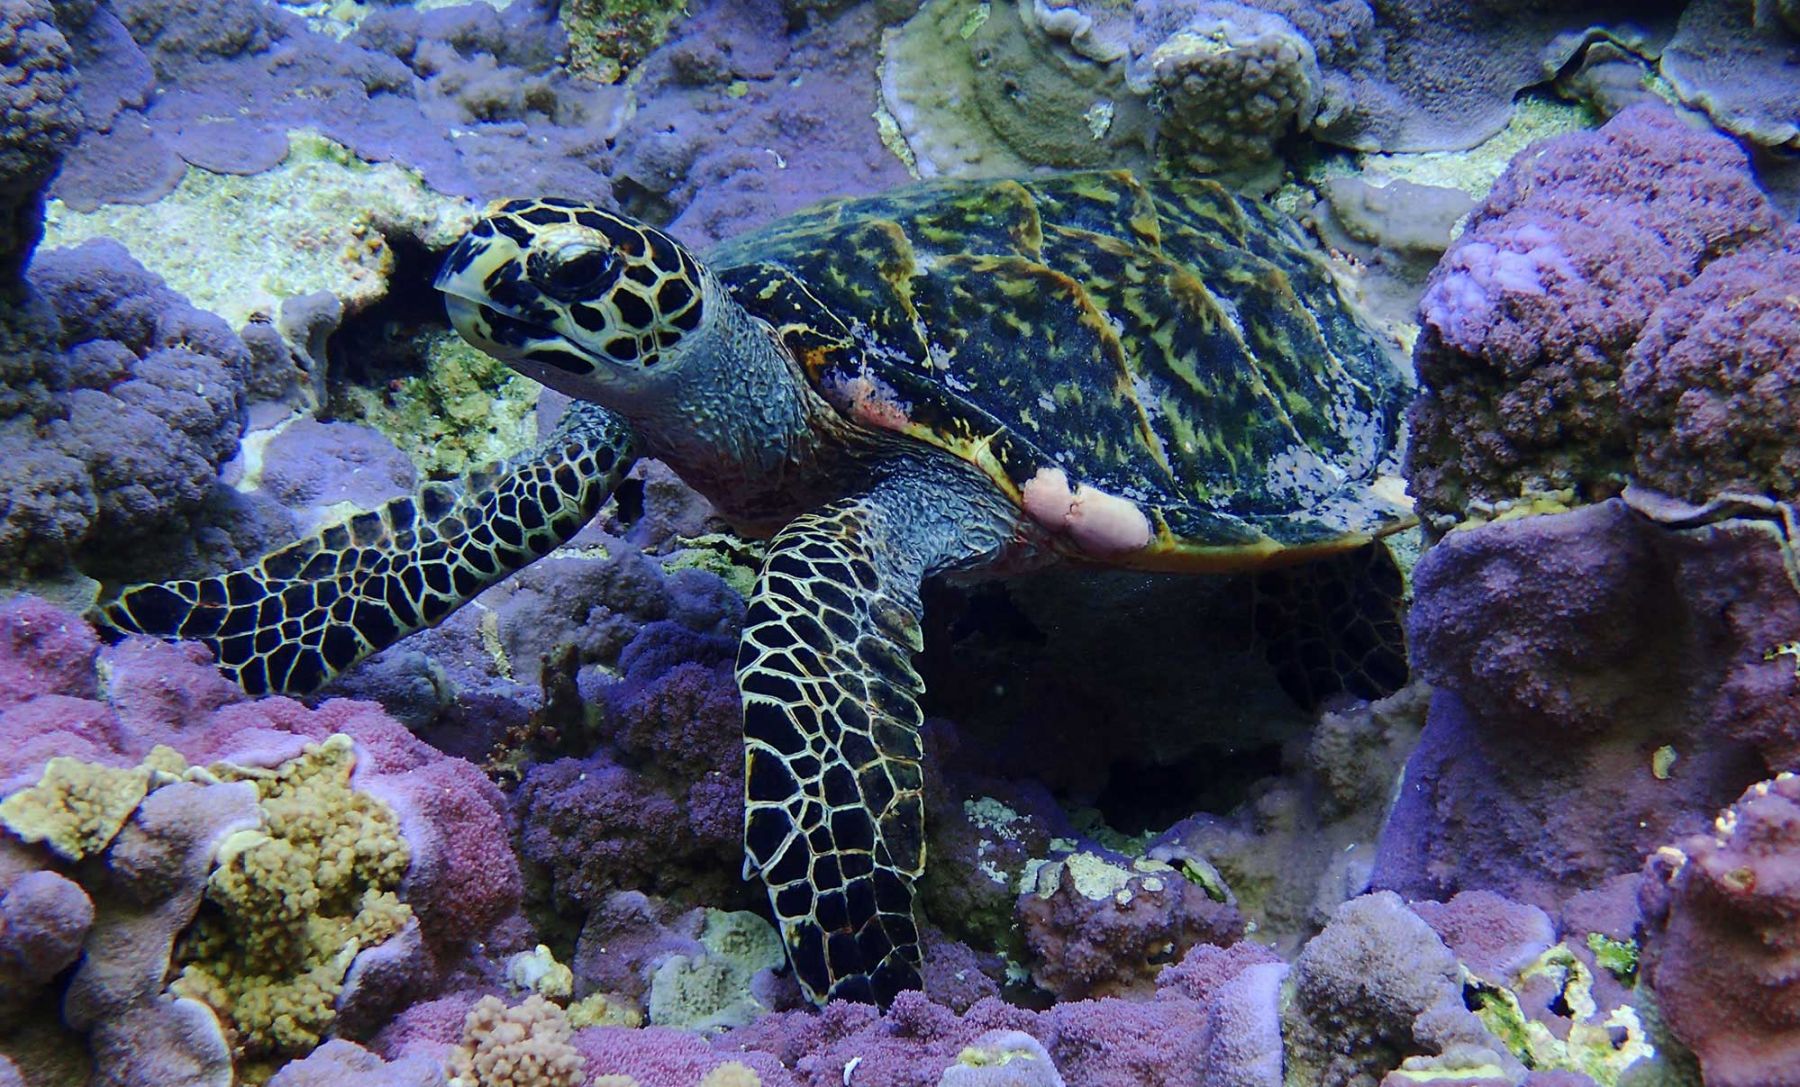 Hawksbill sea turtle. Credit: Kydd Pollock